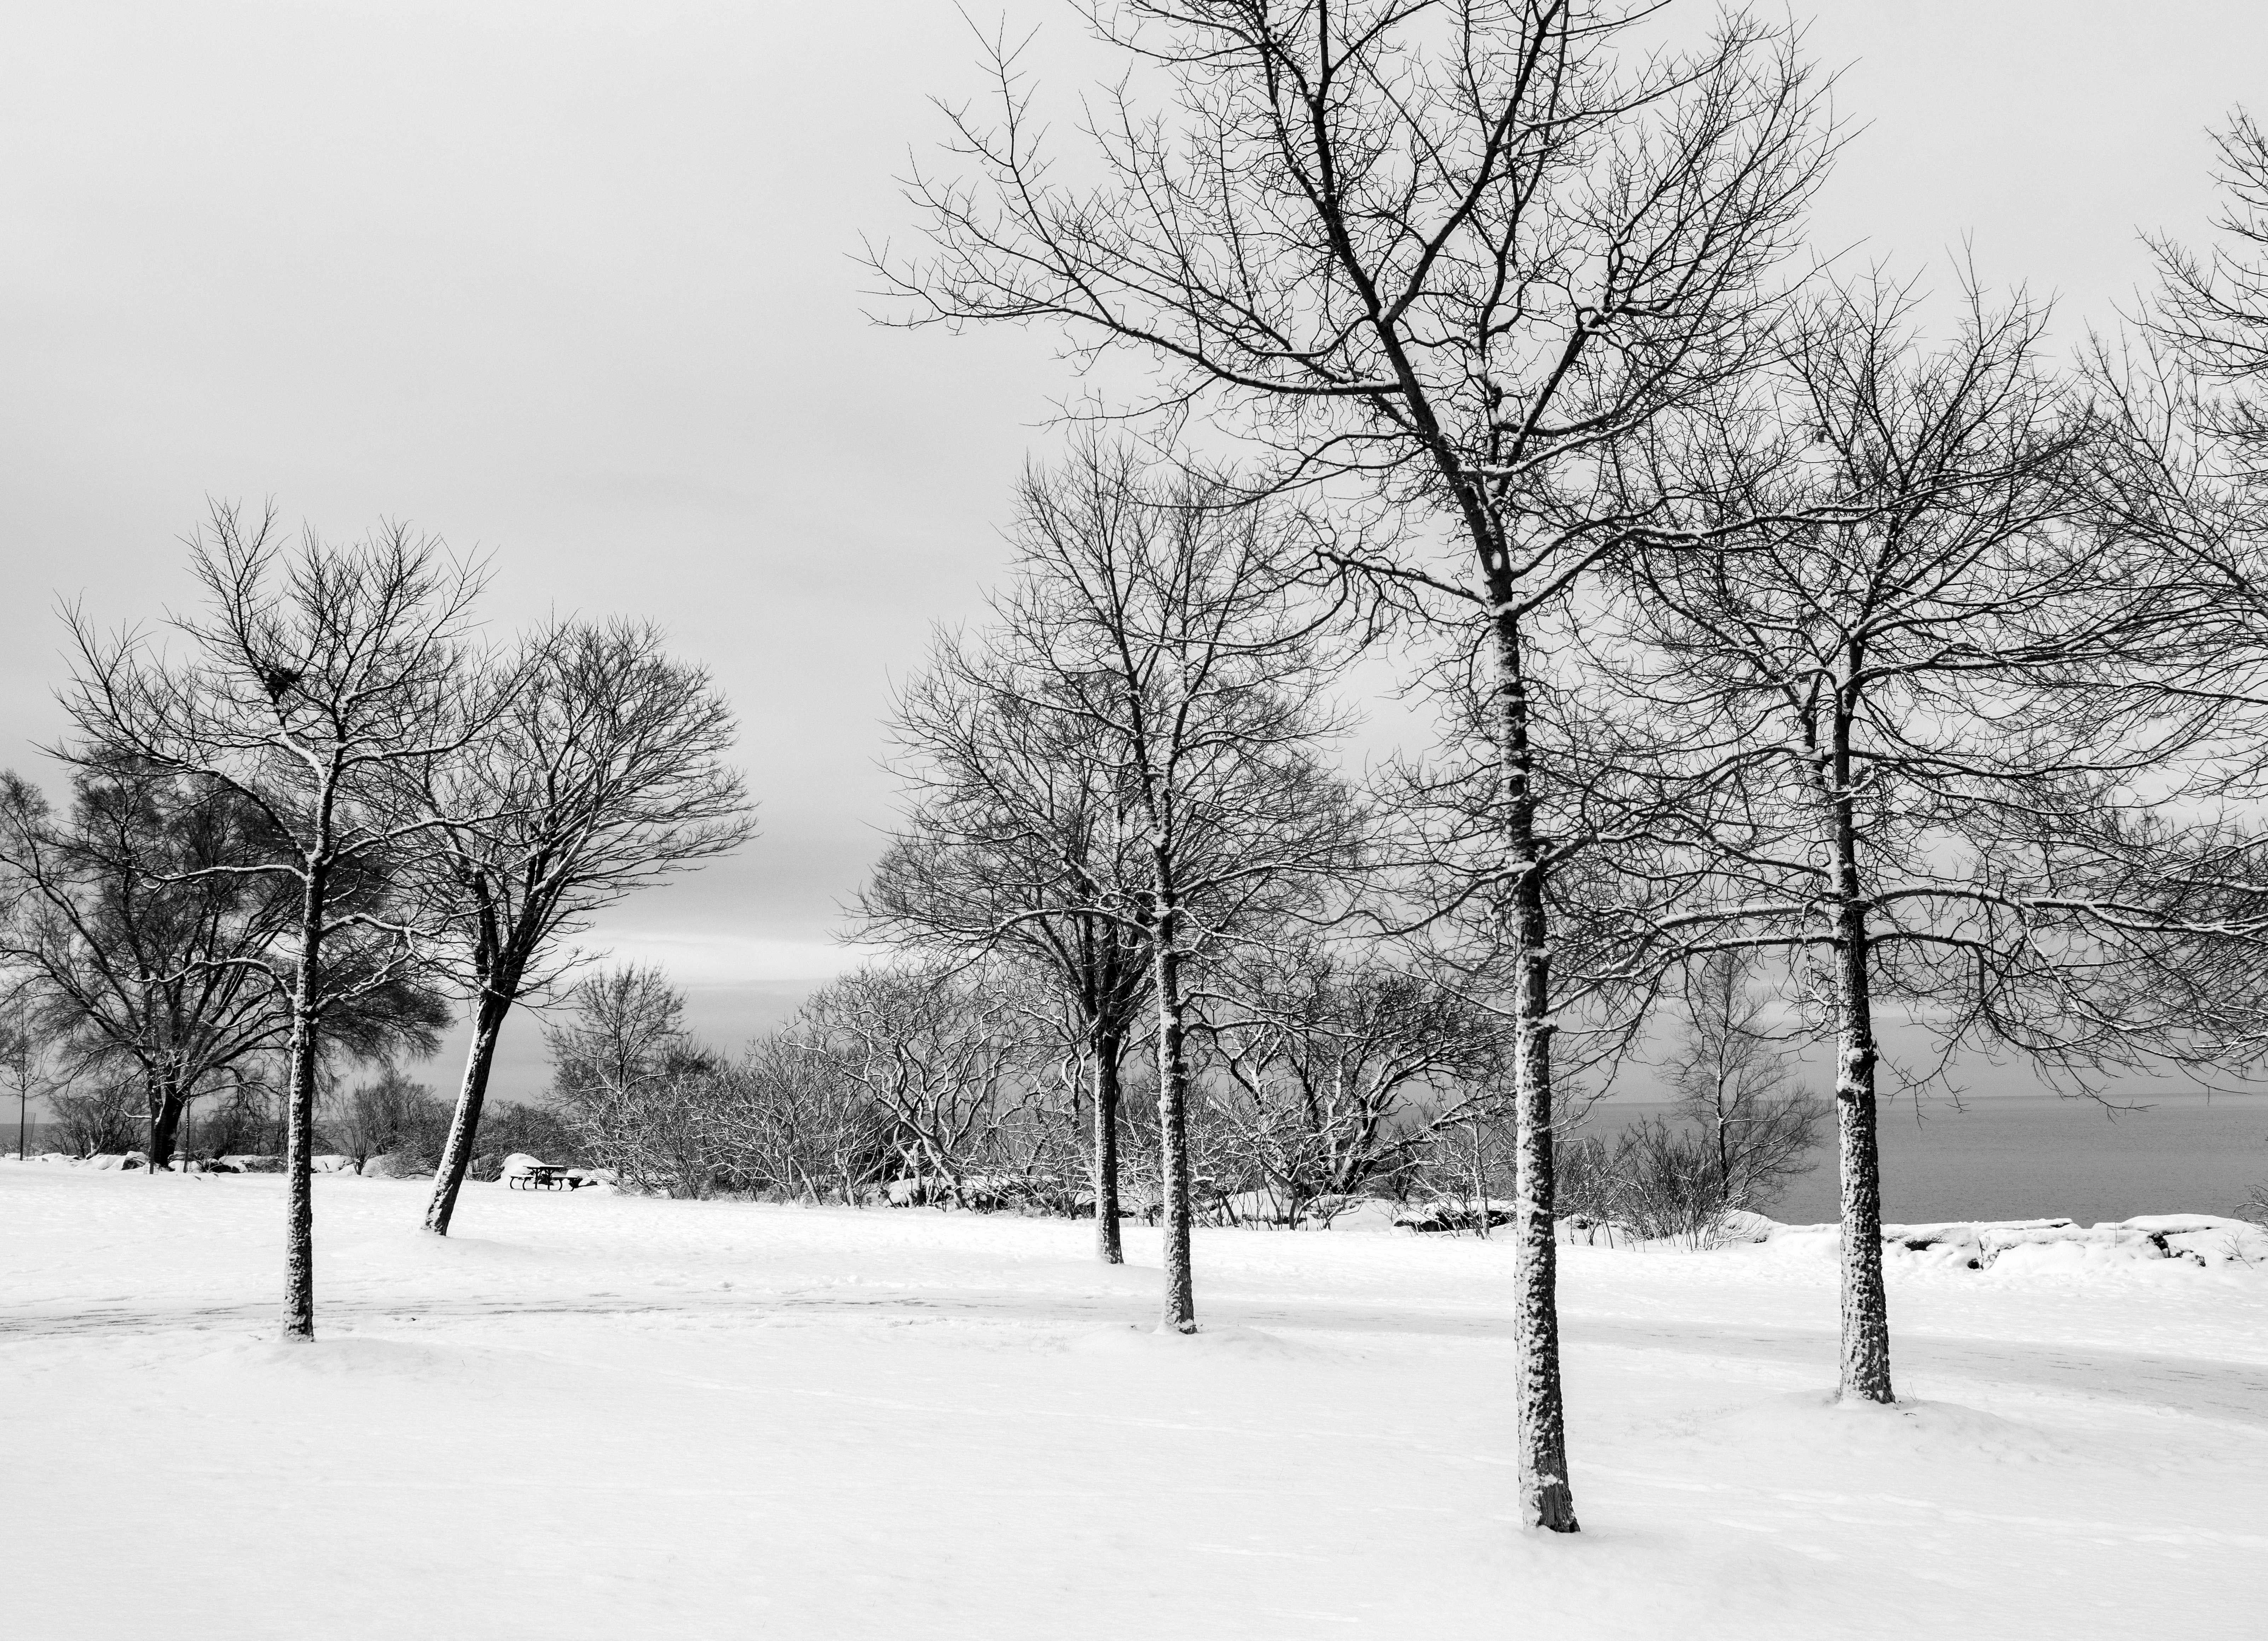 Rick Bogacz Landscape Photograph - "Snow Covered Trees", signed archival pigment print